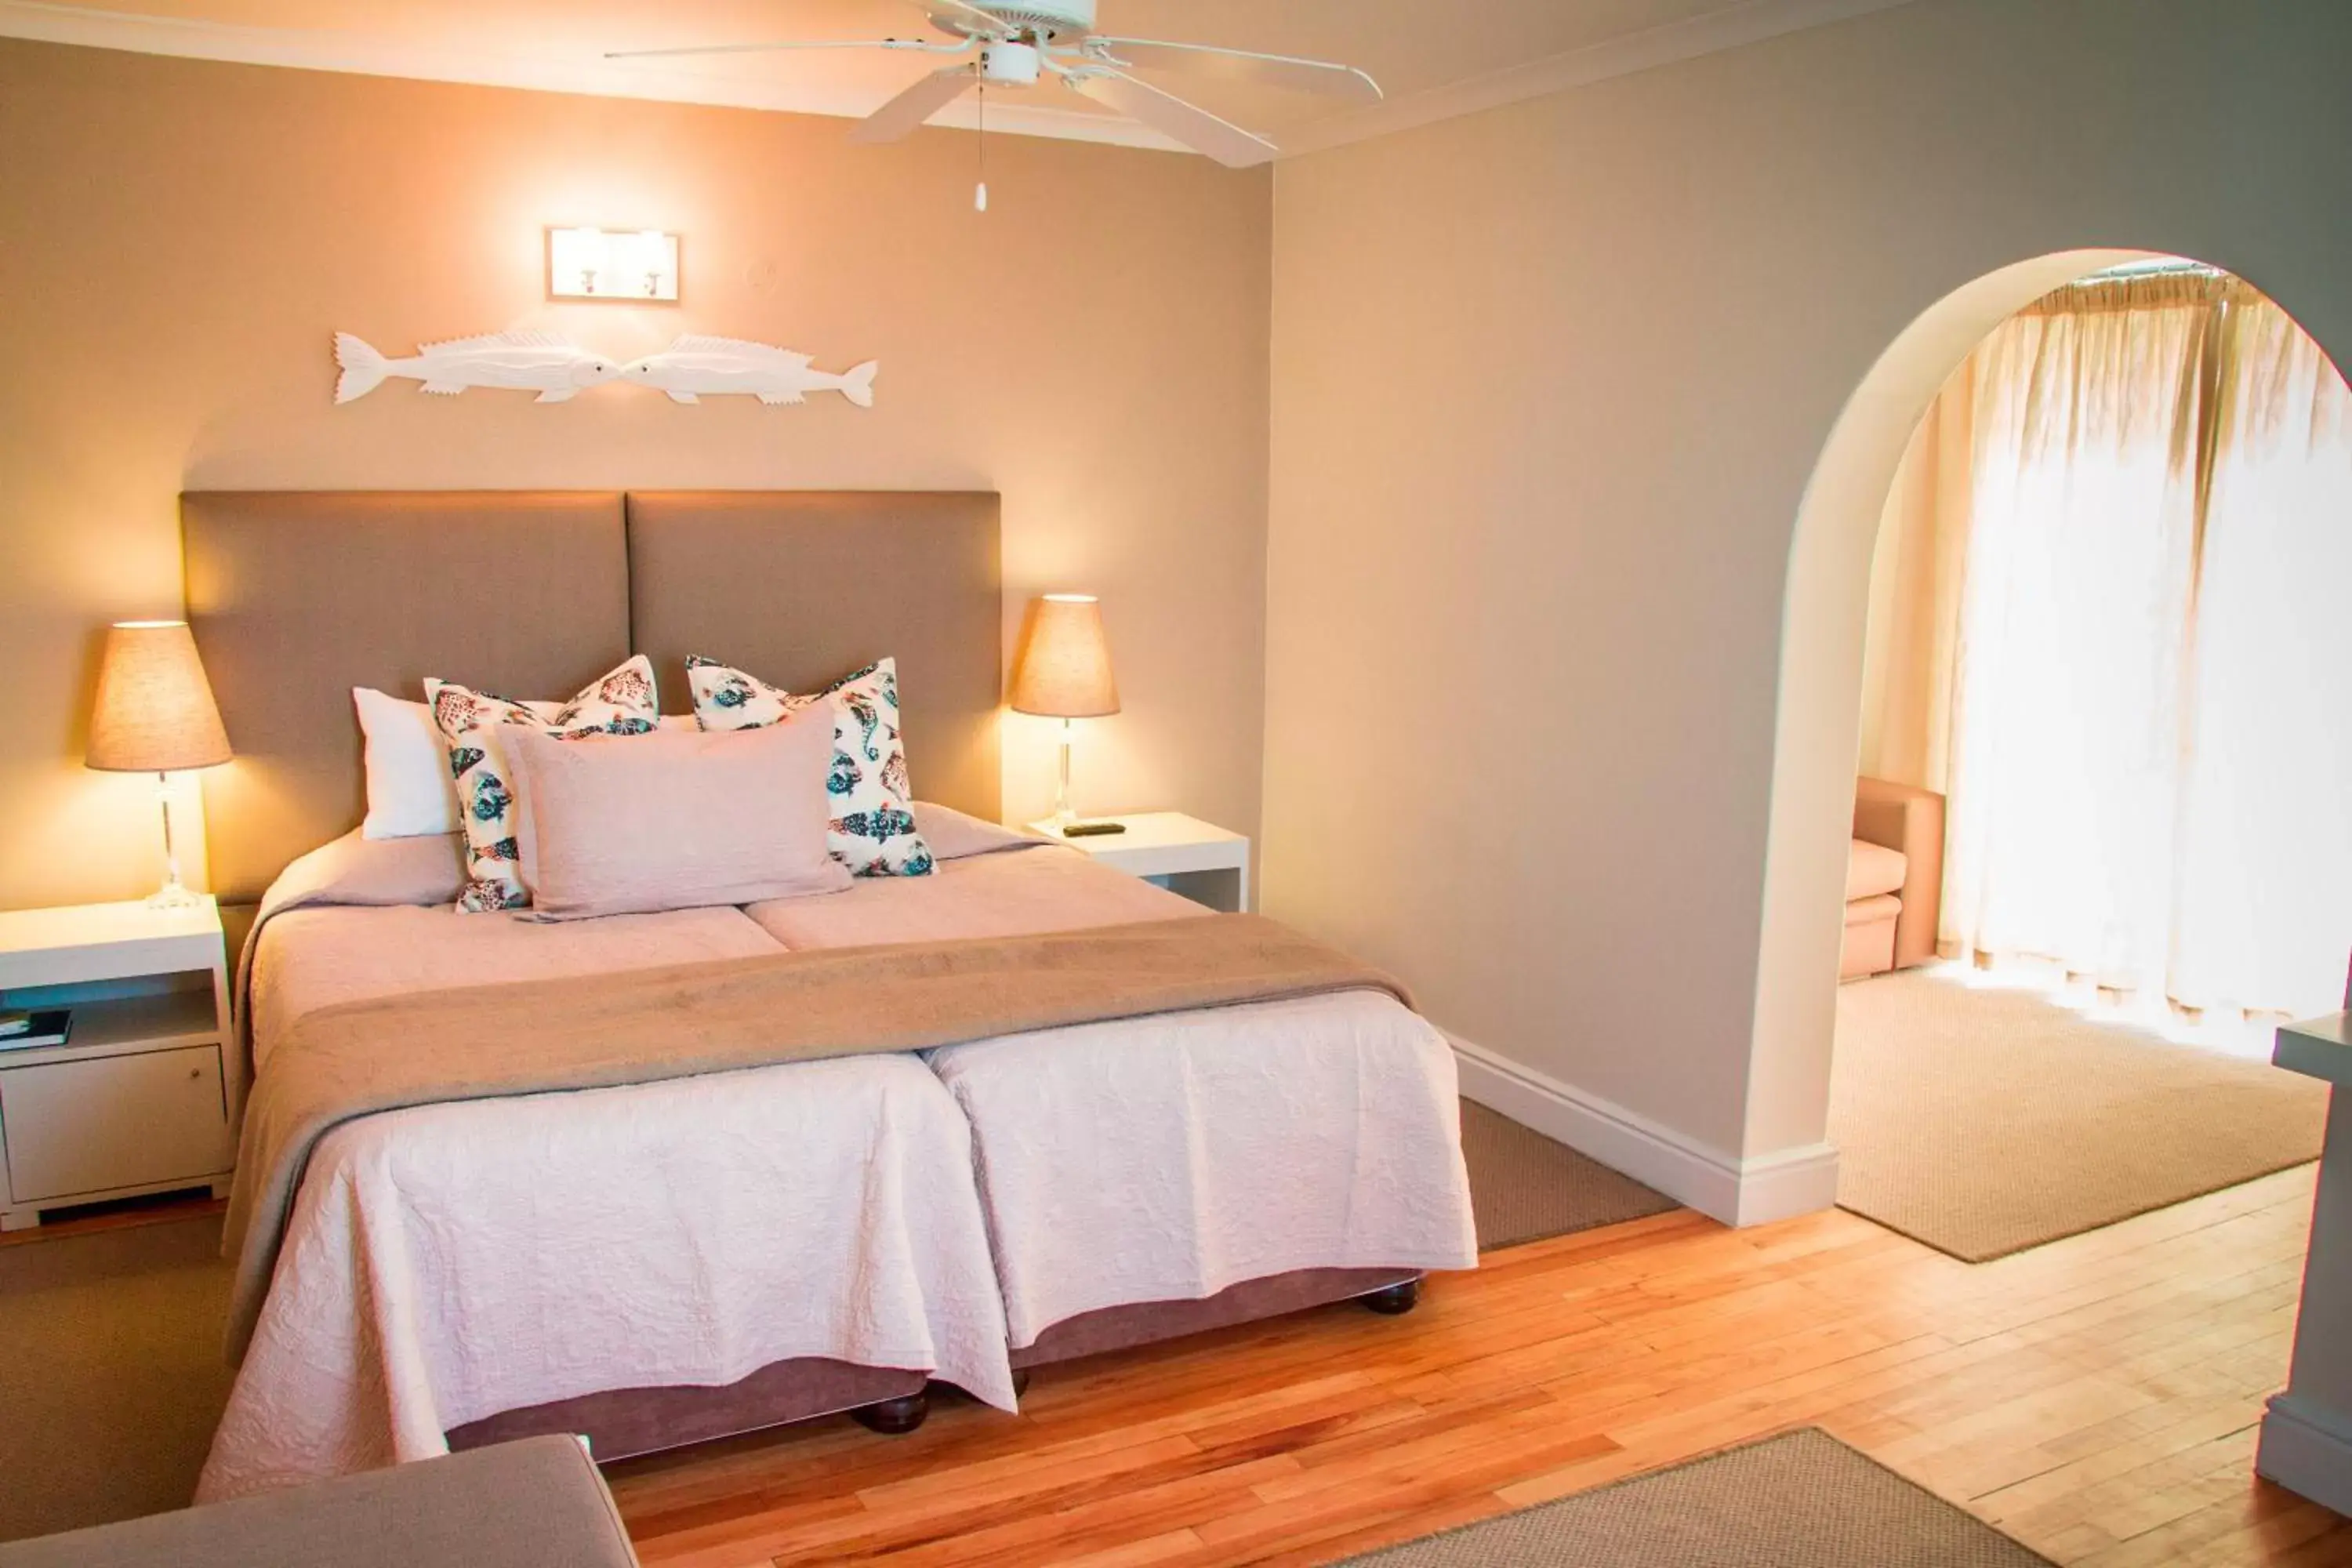 Bed, Room Photo in Milkwood Manor on Sea